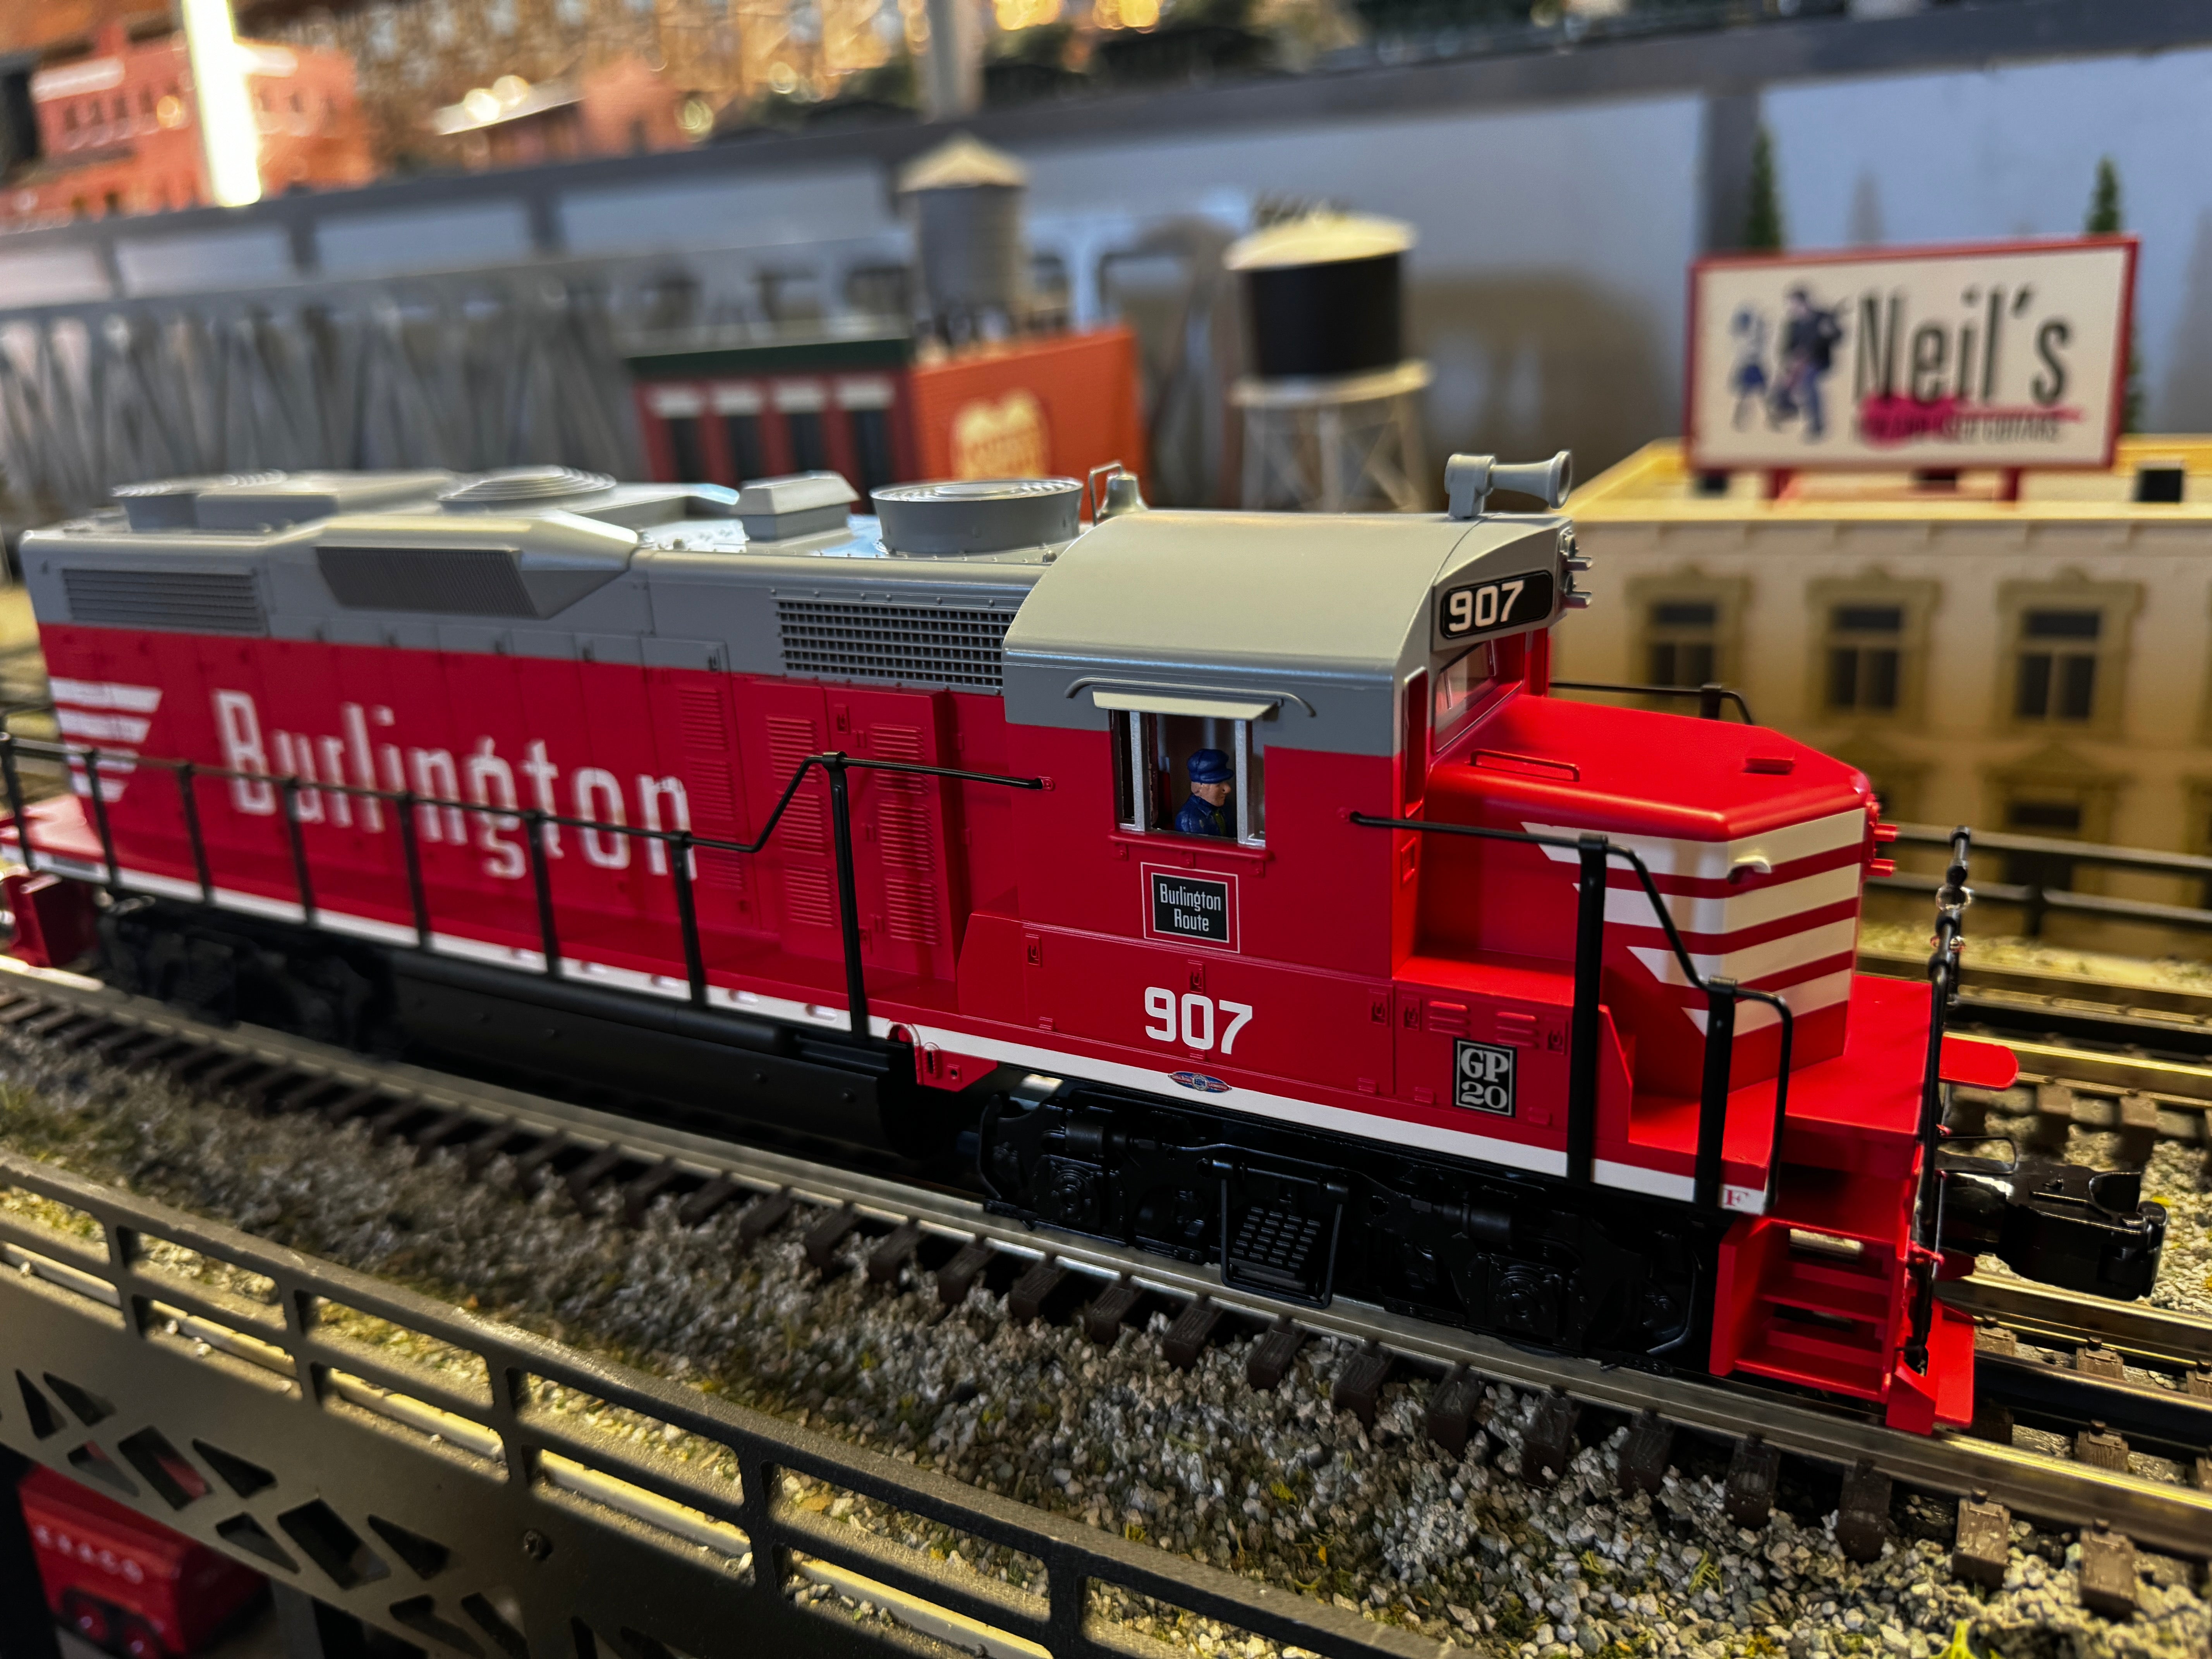 Lionel 2333562 - Legacy GP20 Diesel Locomotive "Chicago, Burlington & Quincy" #915